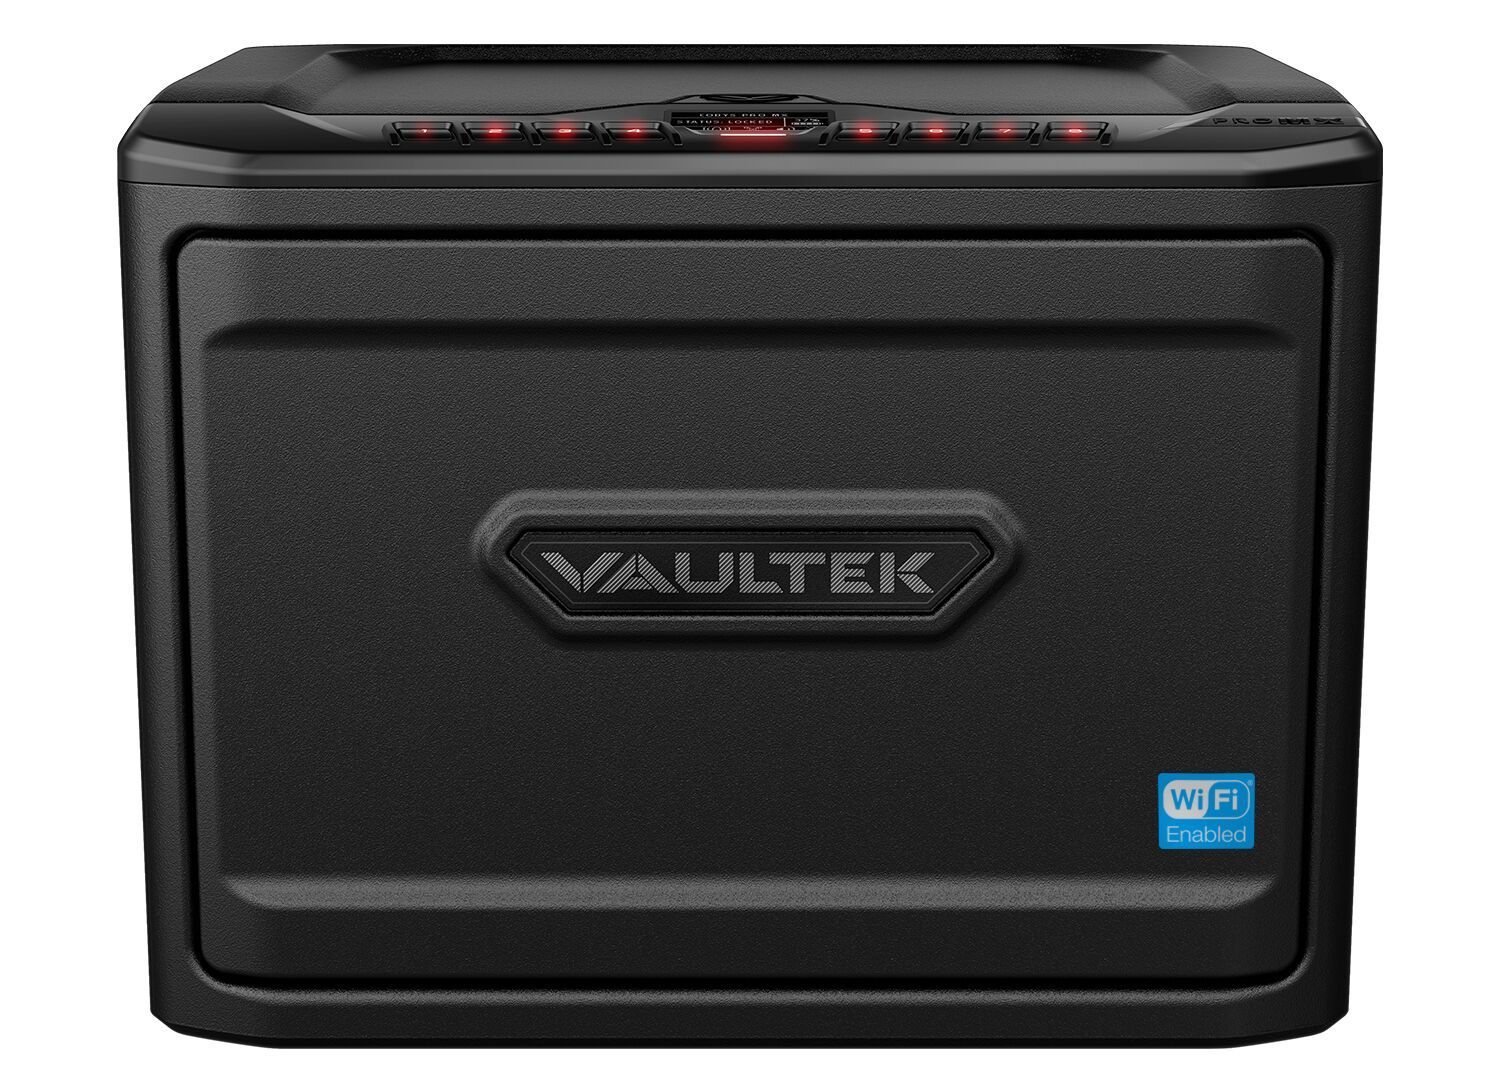 Vaultek MX WiFi Large Capacity Rugged Wi-Fi Smart Safe